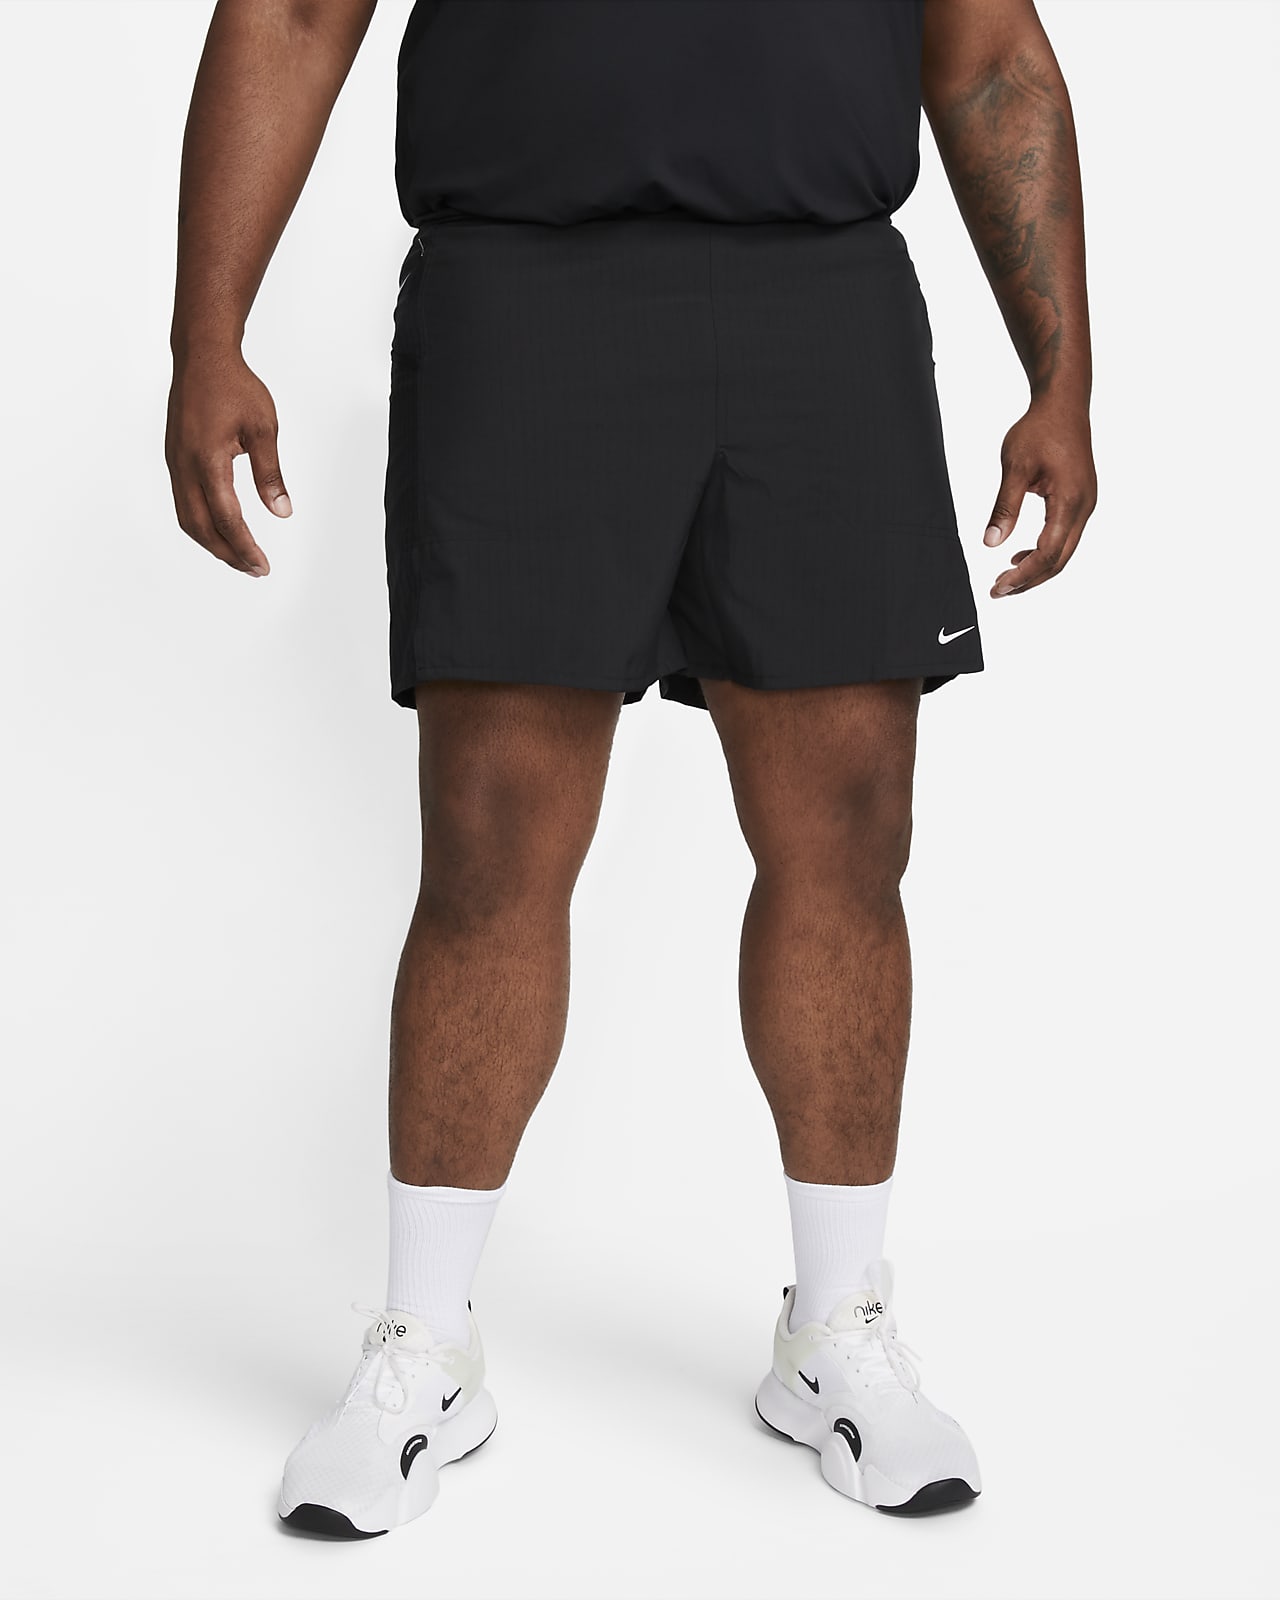 Drifit Gym Shorts Above the Knee Shorts 16 Inches Length Sports Fitness  Athletic Workout Shorts Freesize